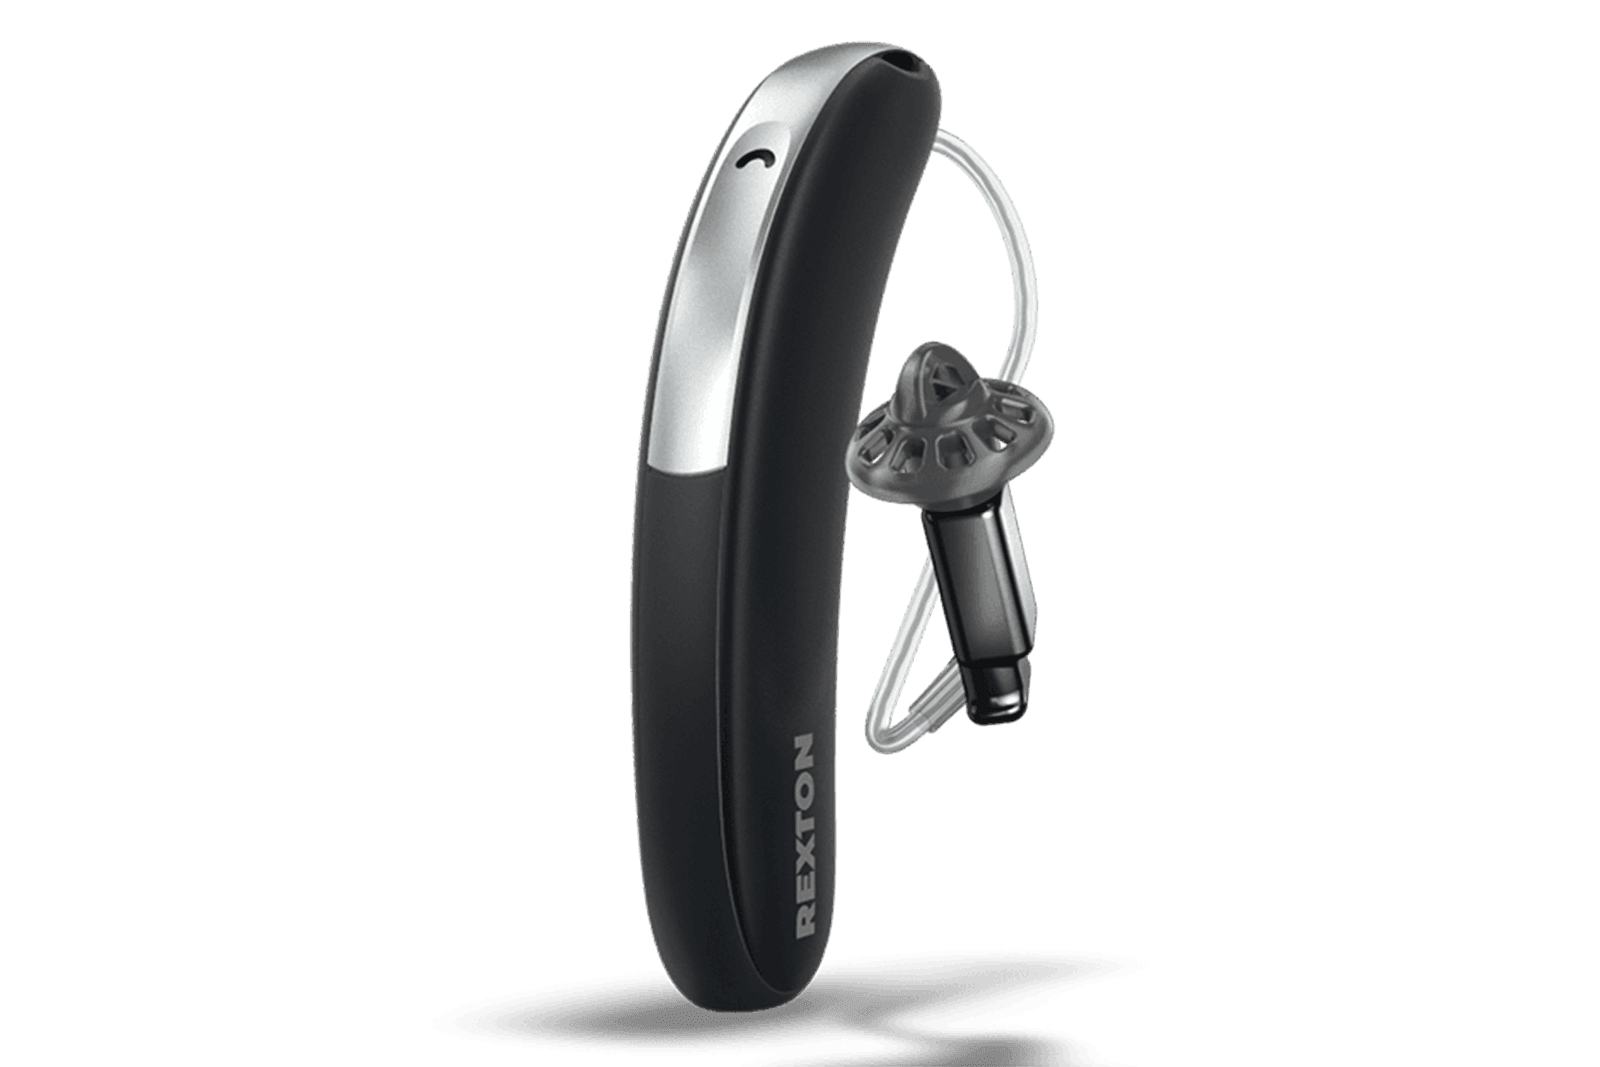 BiCore Slim RIC hearing aid in black-silver